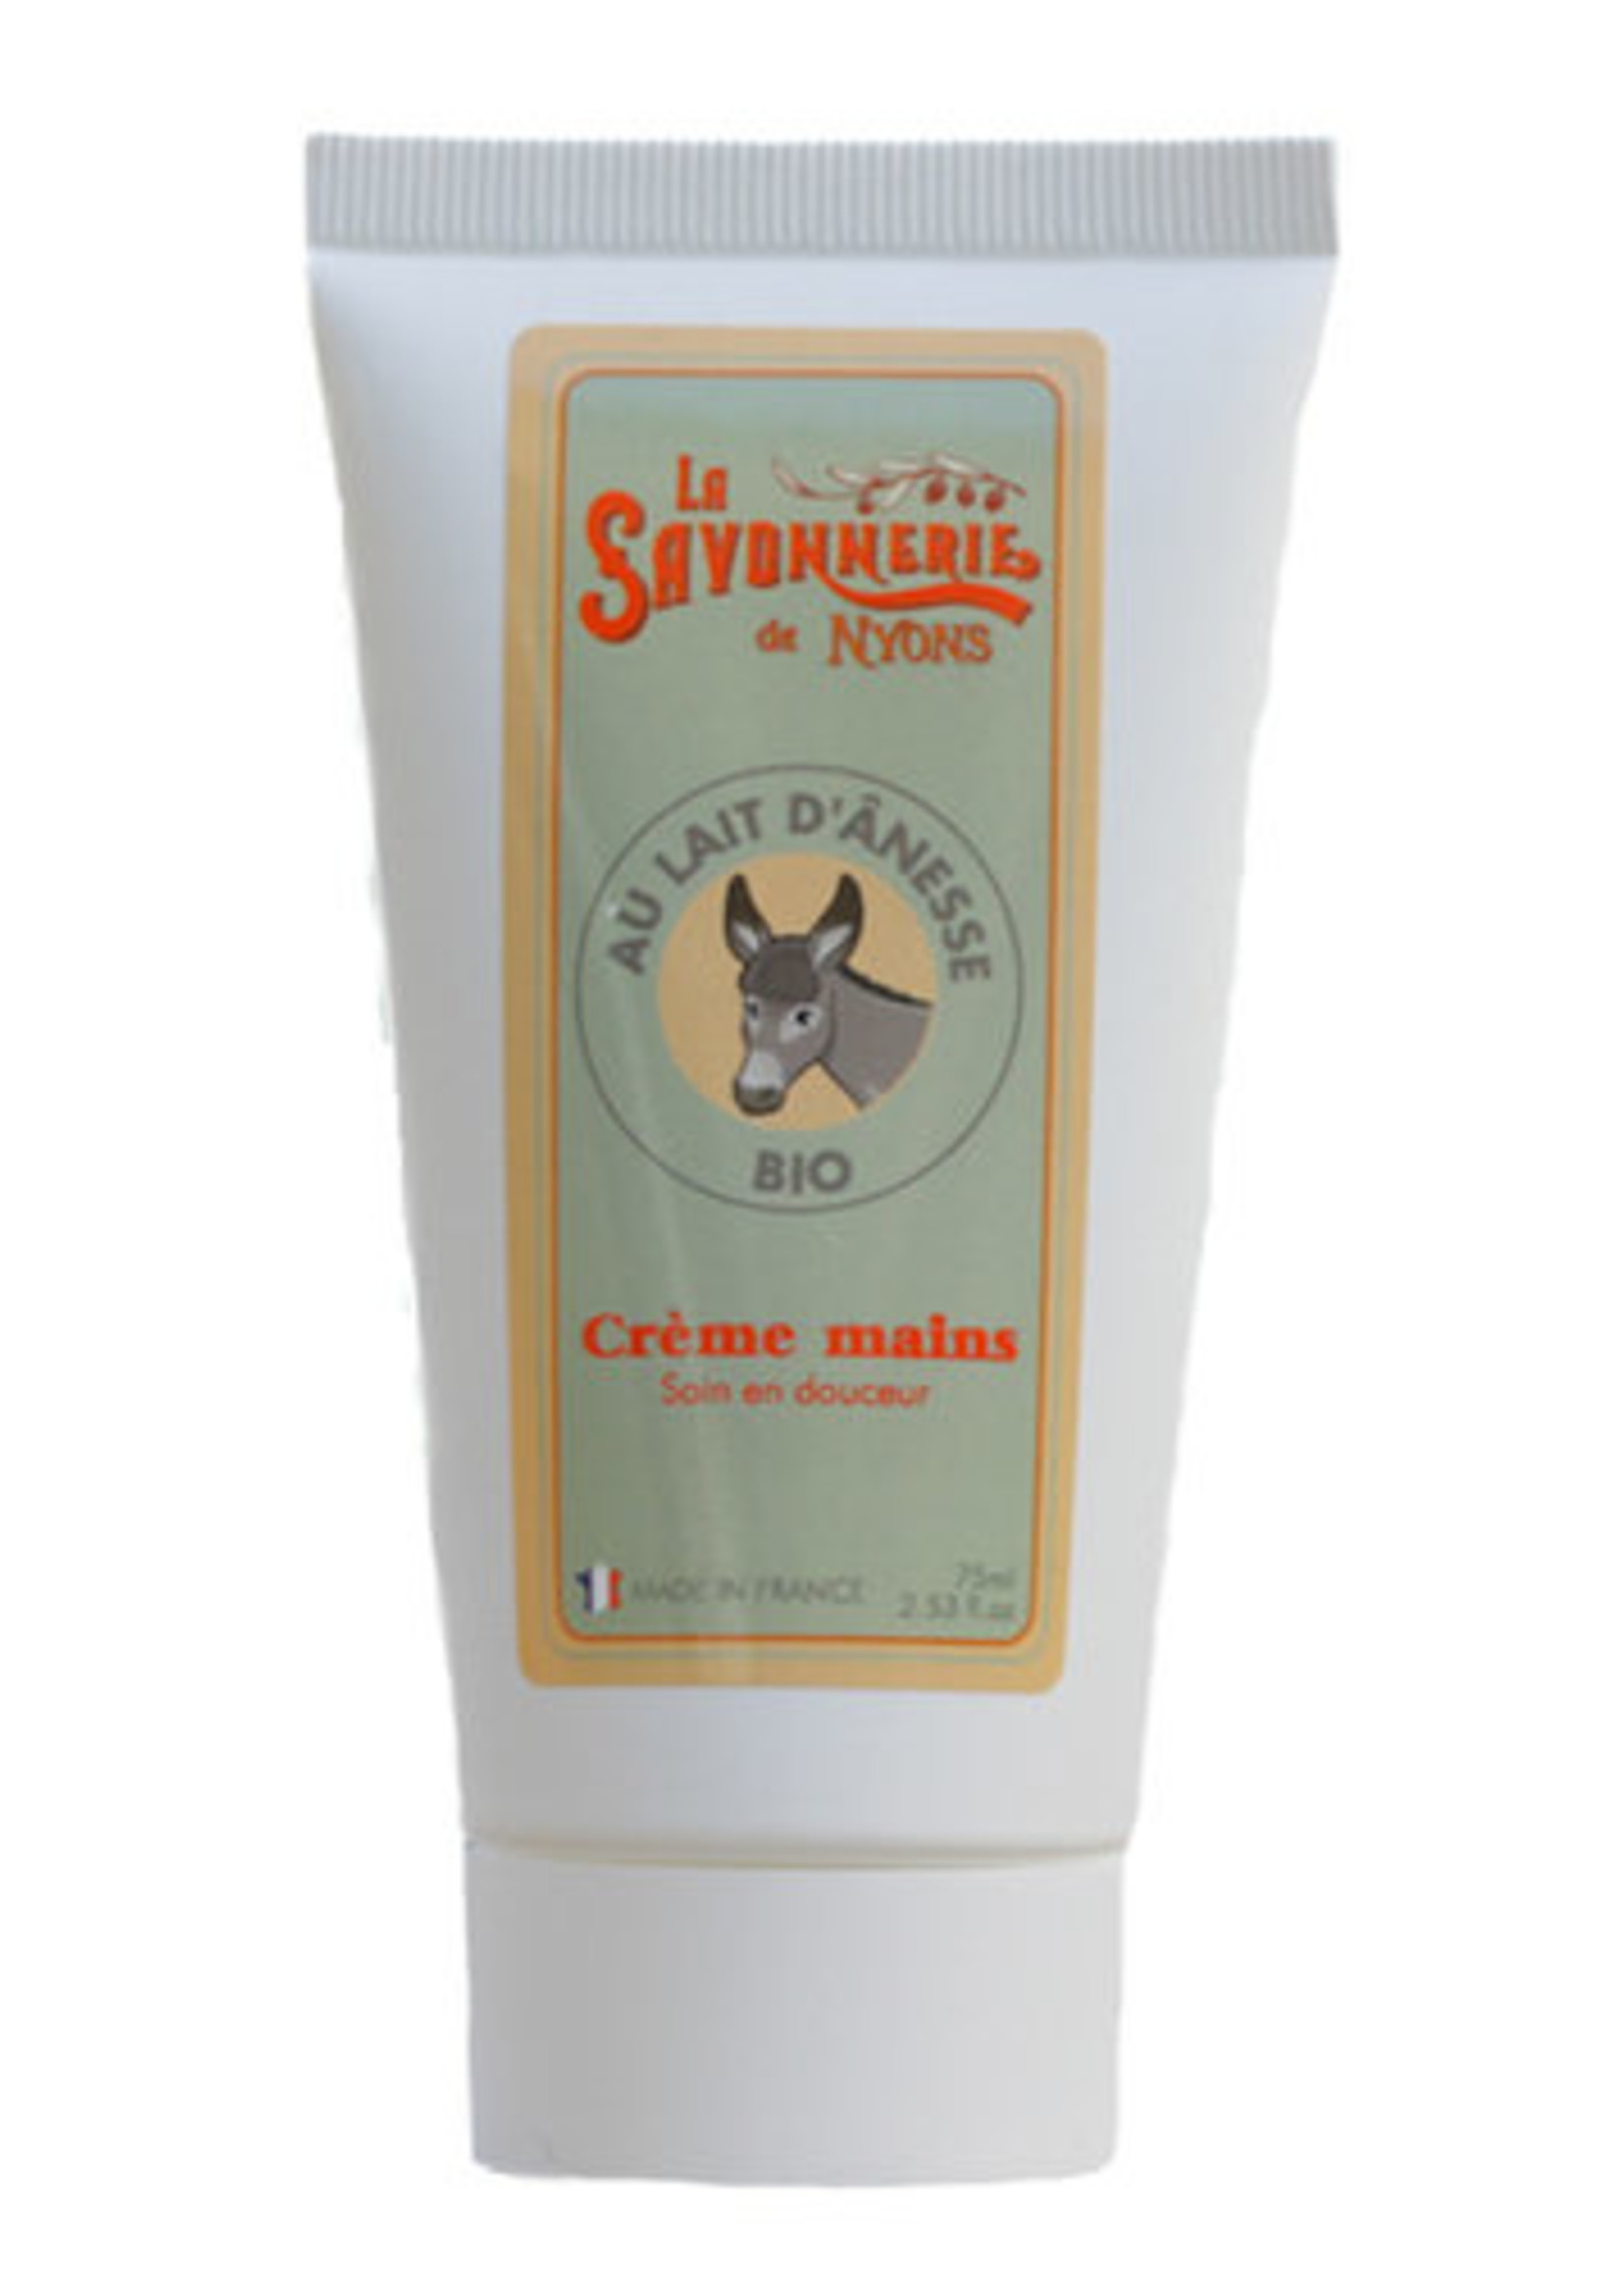 La Savonnerie de Nyons Organic hand cream with donkey milk 75ml